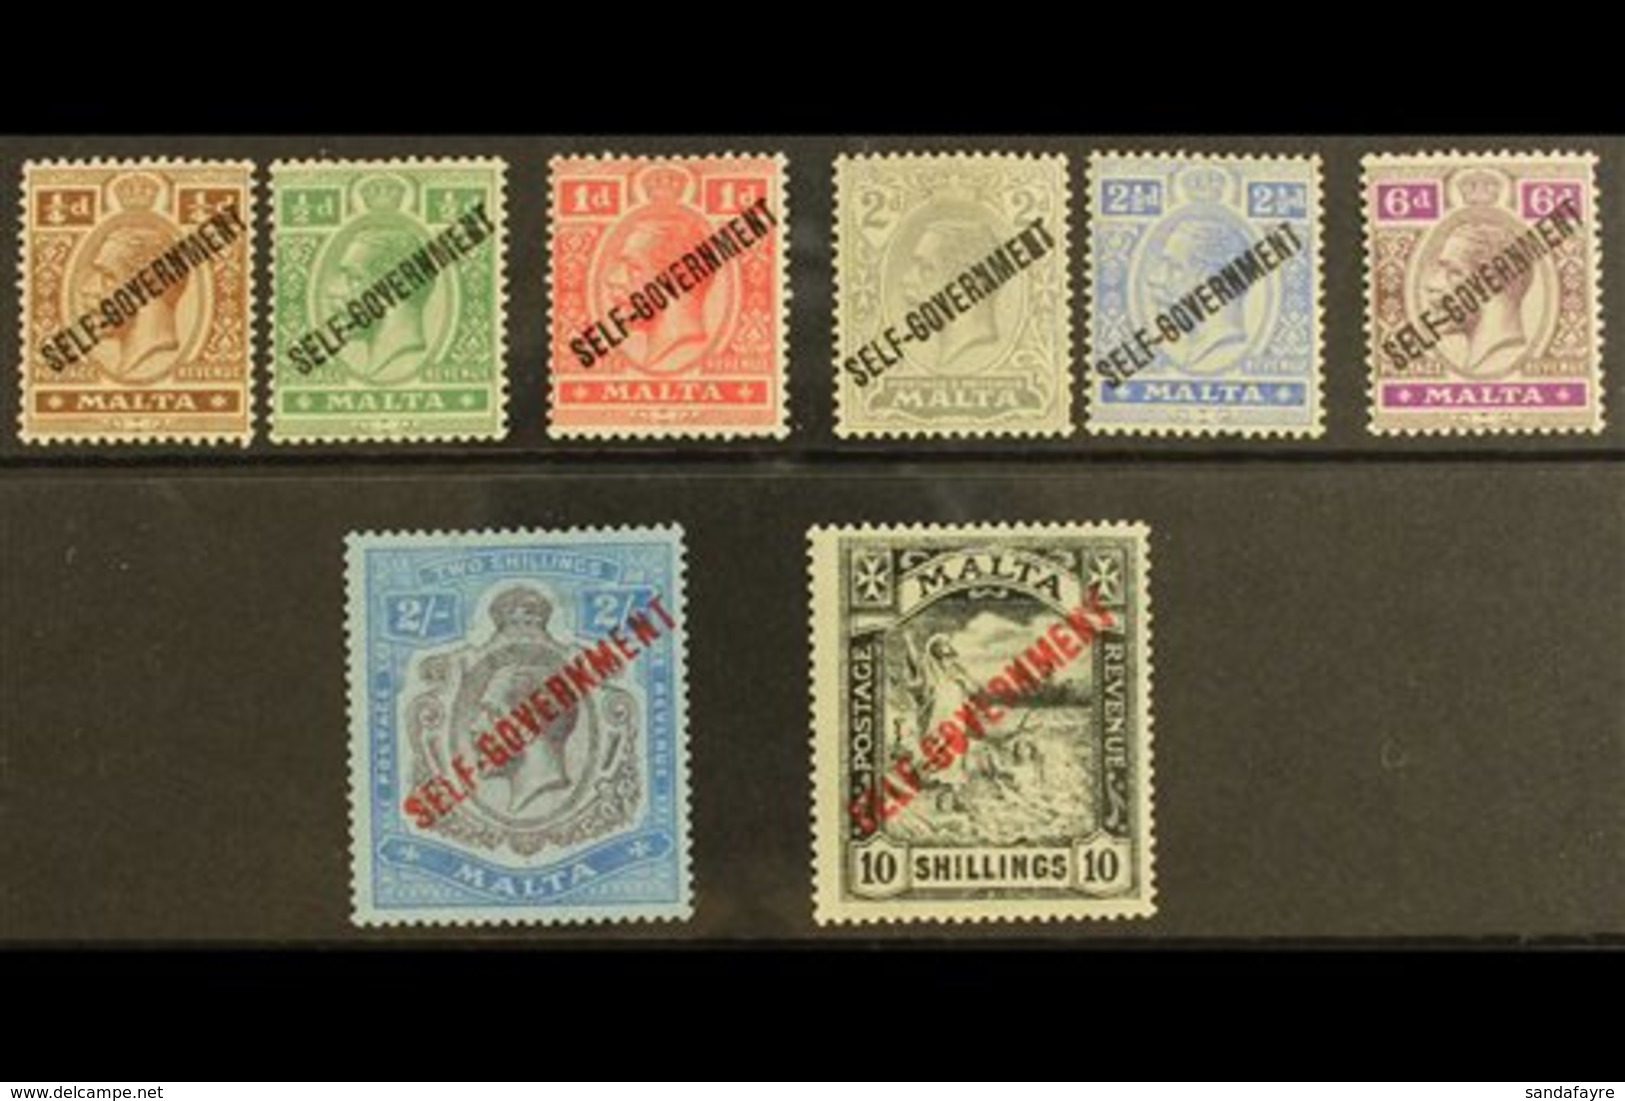 1922 Geo V Set To 10s, Wmk Script CA, Ovptd "Self-Government", SG 114/21, Complete Very Fine Mint, (8 Stamps) For More I - Malta (...-1964)